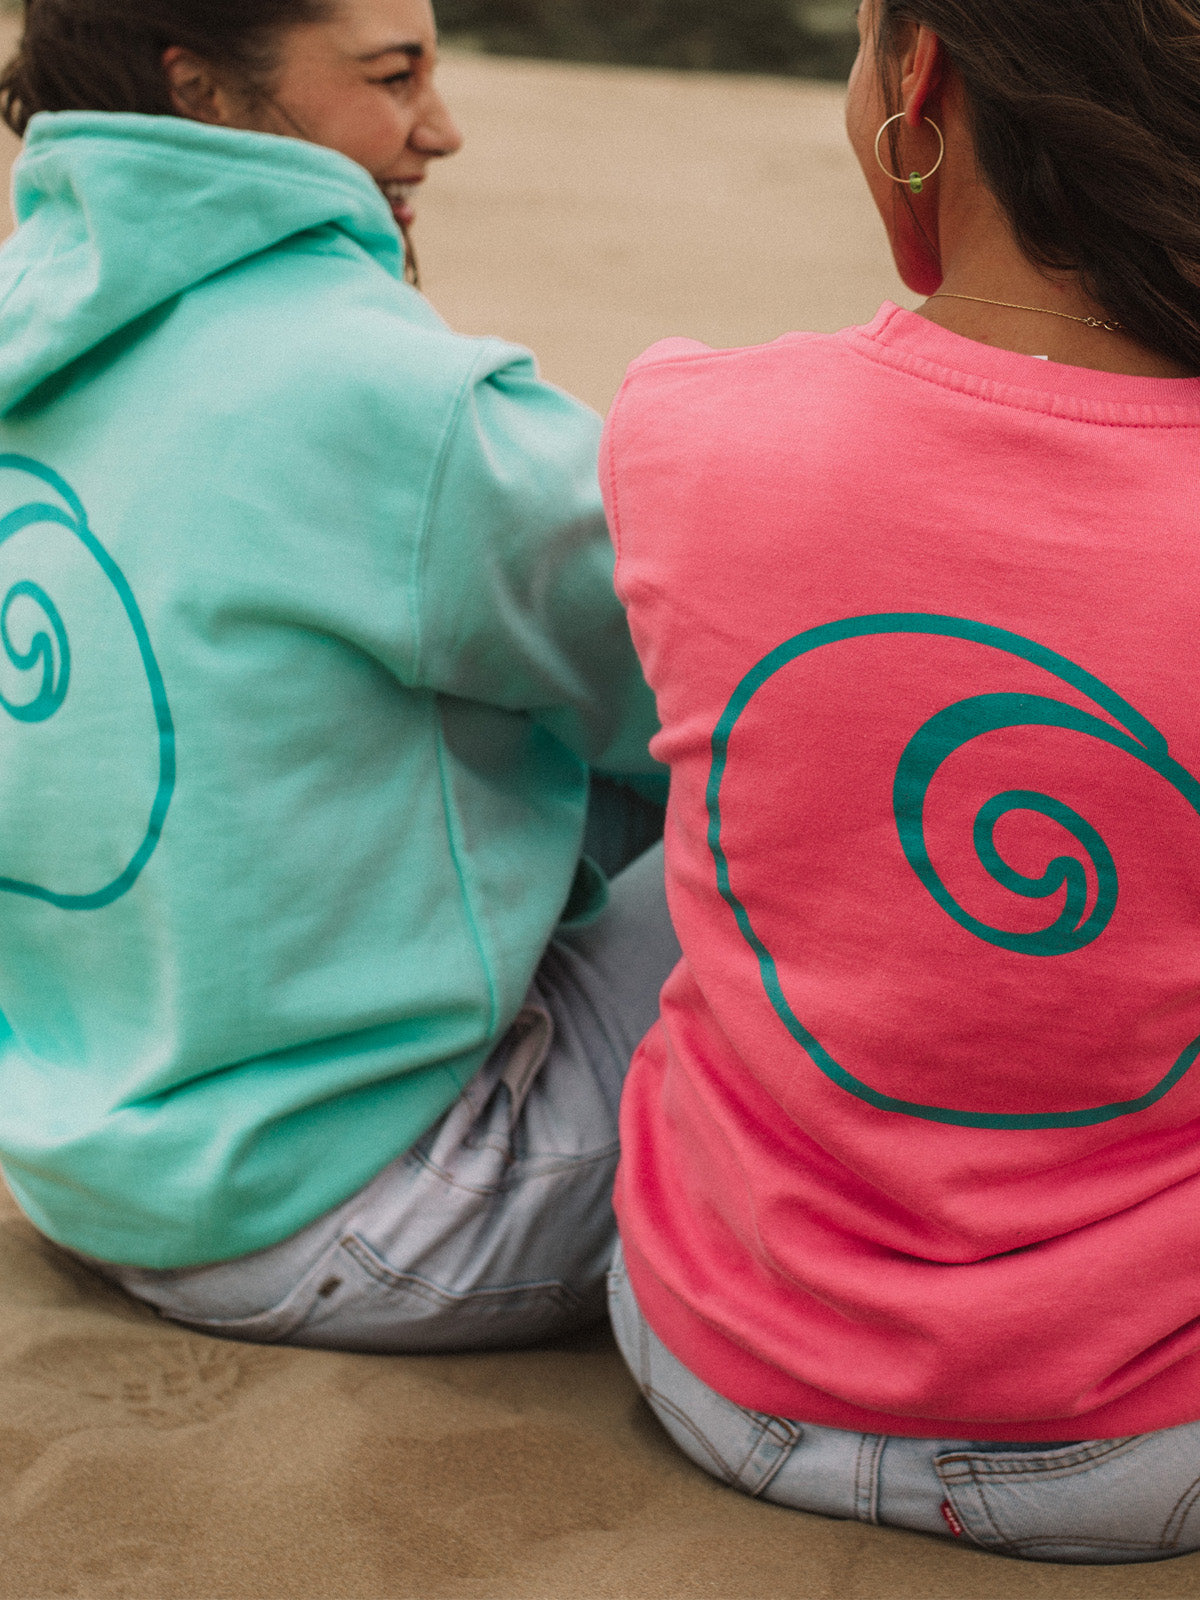 Unisex Pink and Mint Nalu Sweatshirts worn by girls on beach.